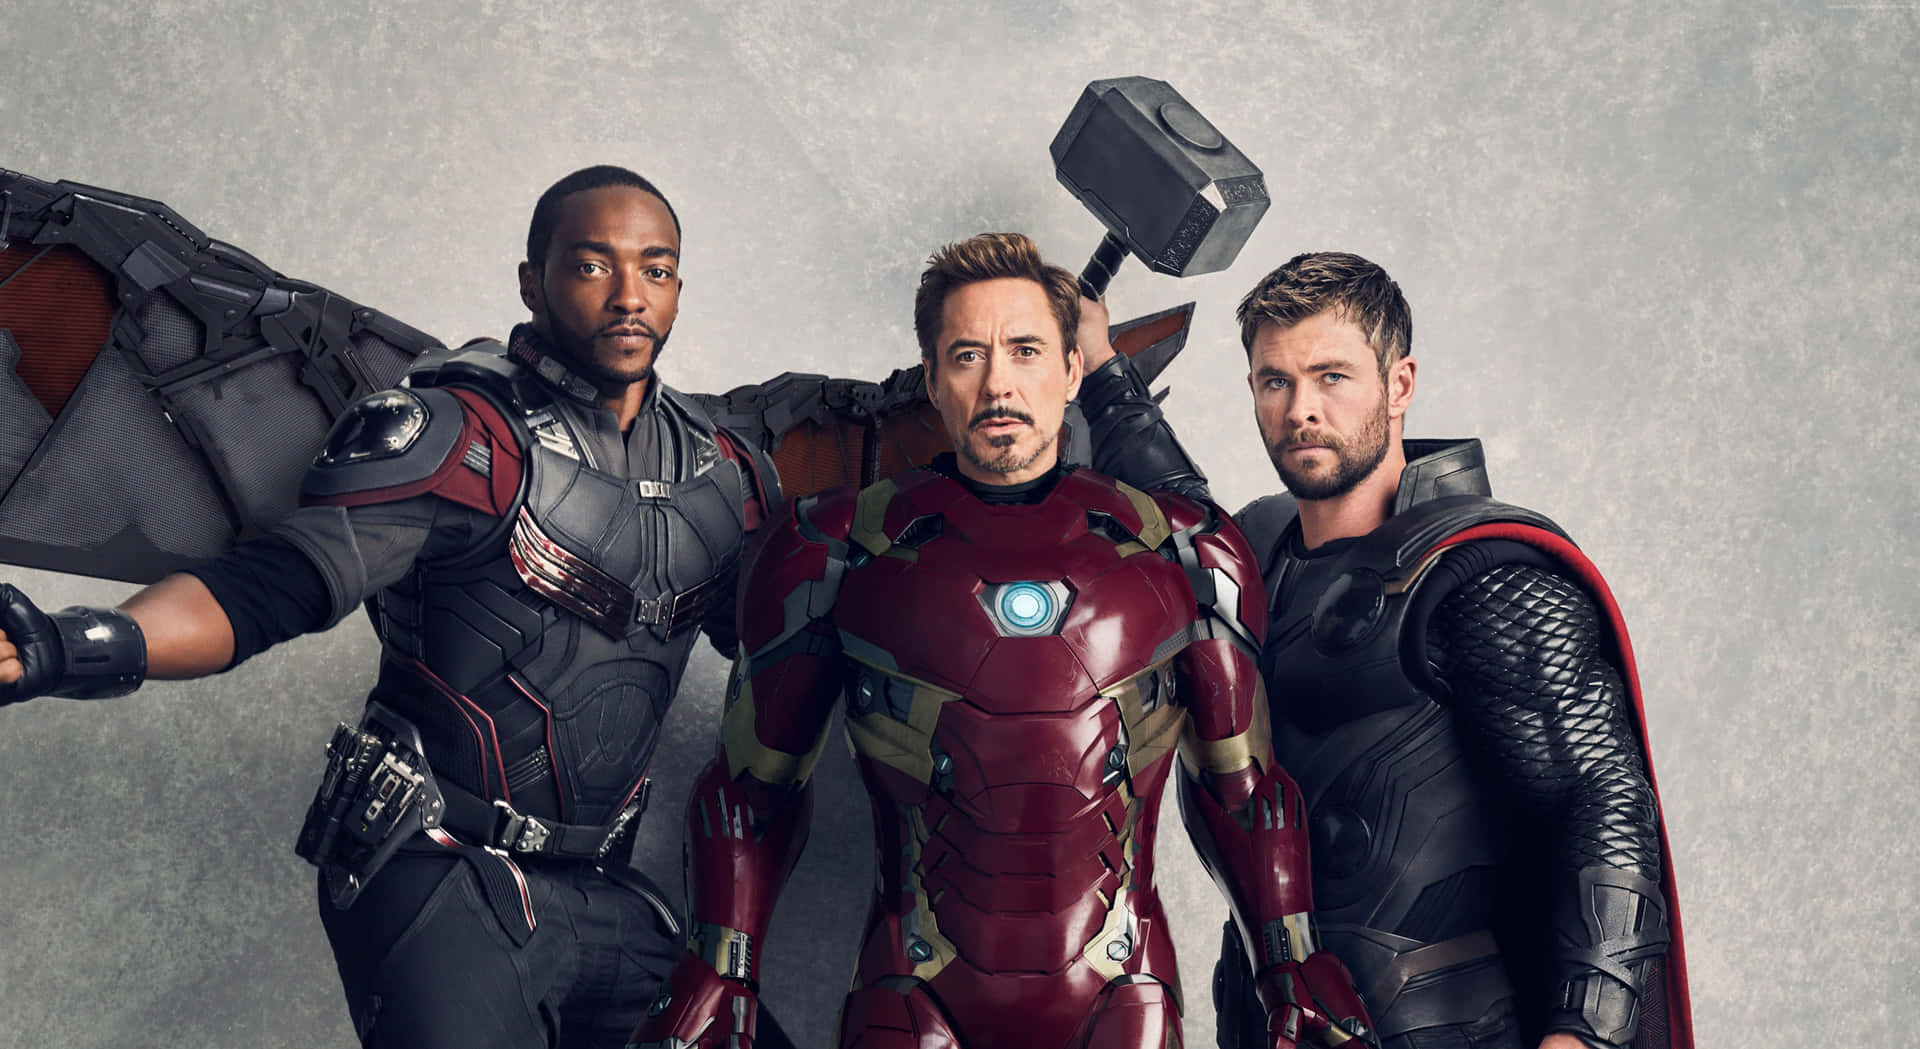 Ironman vs Thor - Who Will Win? Wallpaper